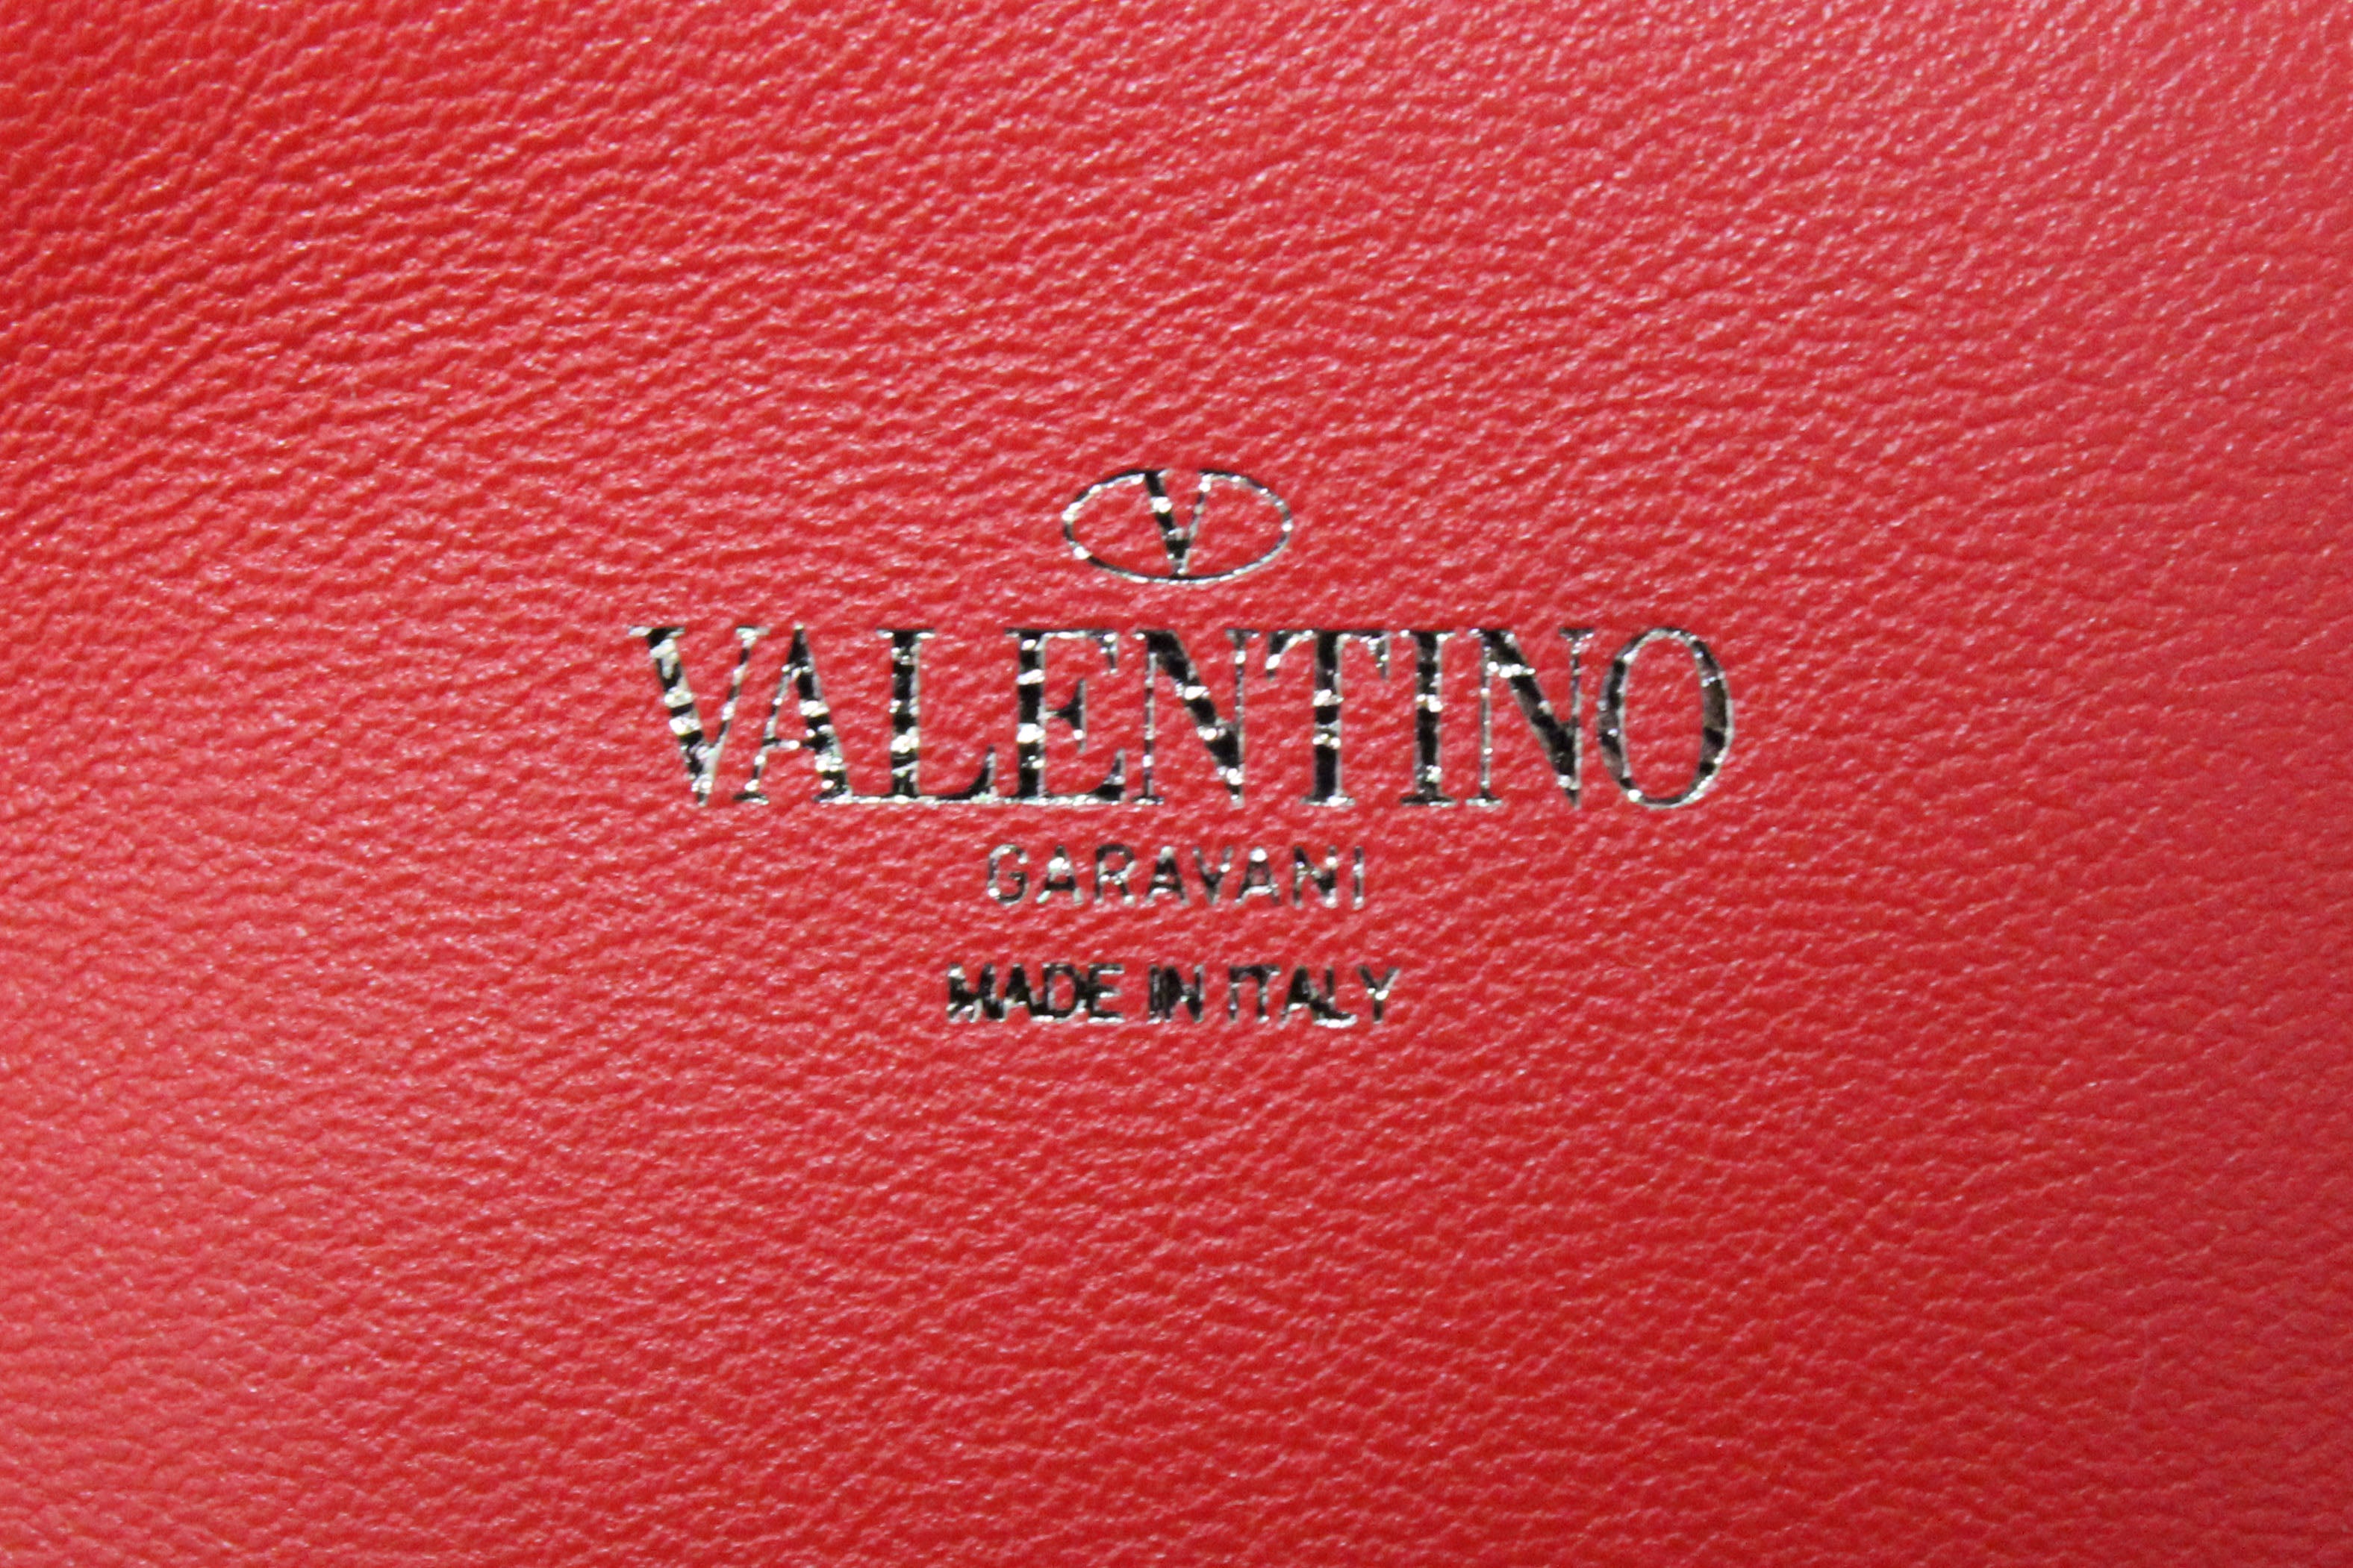 NEW Authentic Valentino Garavani White Atelier Metal Stitch 01 Canvas Mini Tote Bag